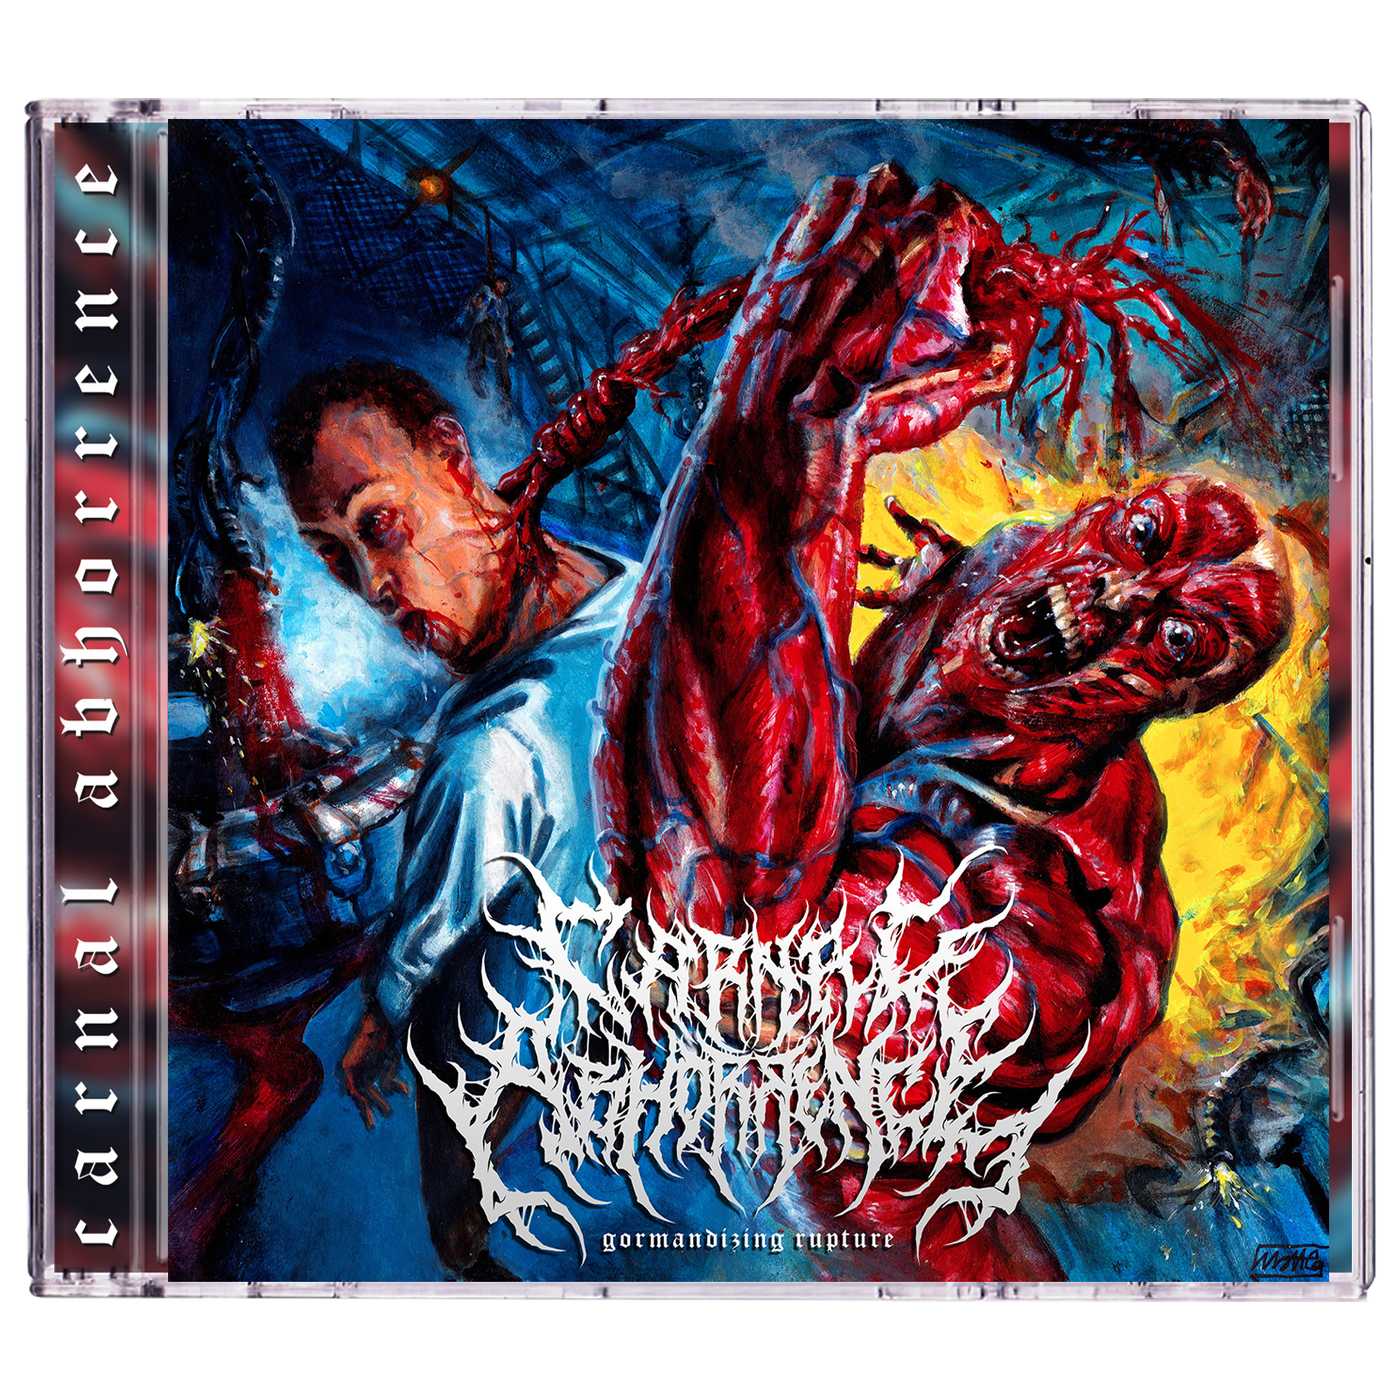 Carnal Abhorrence 'Gormandizing Rupture' CD